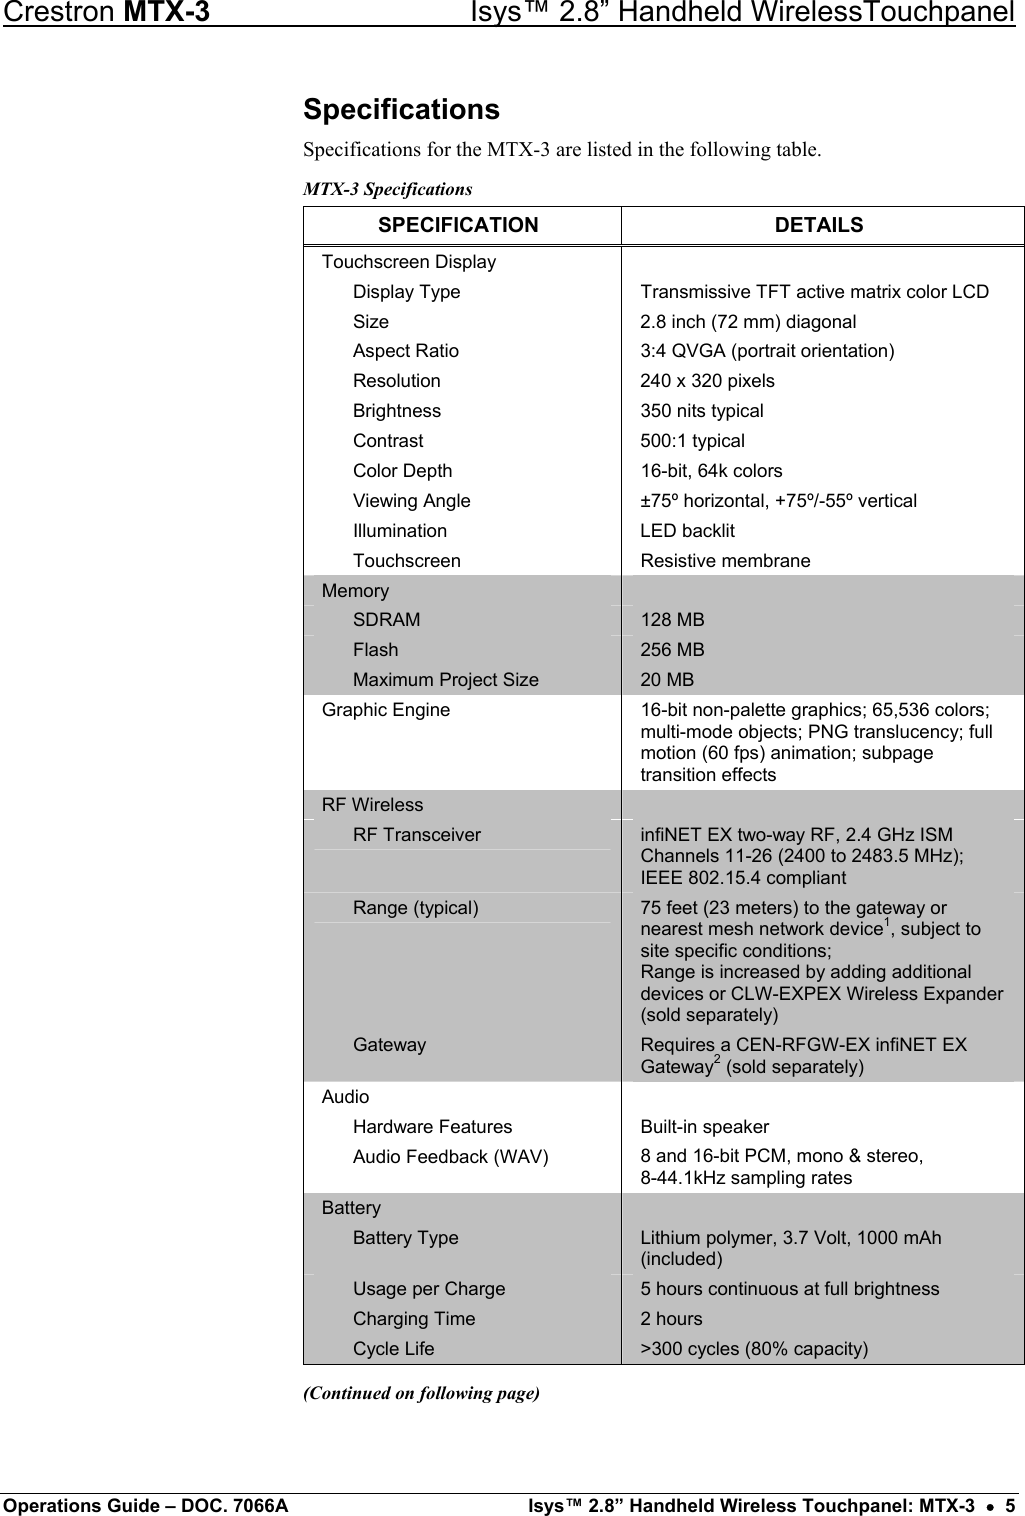 Crestron dm-rmc-4k-100-c user manual pdf